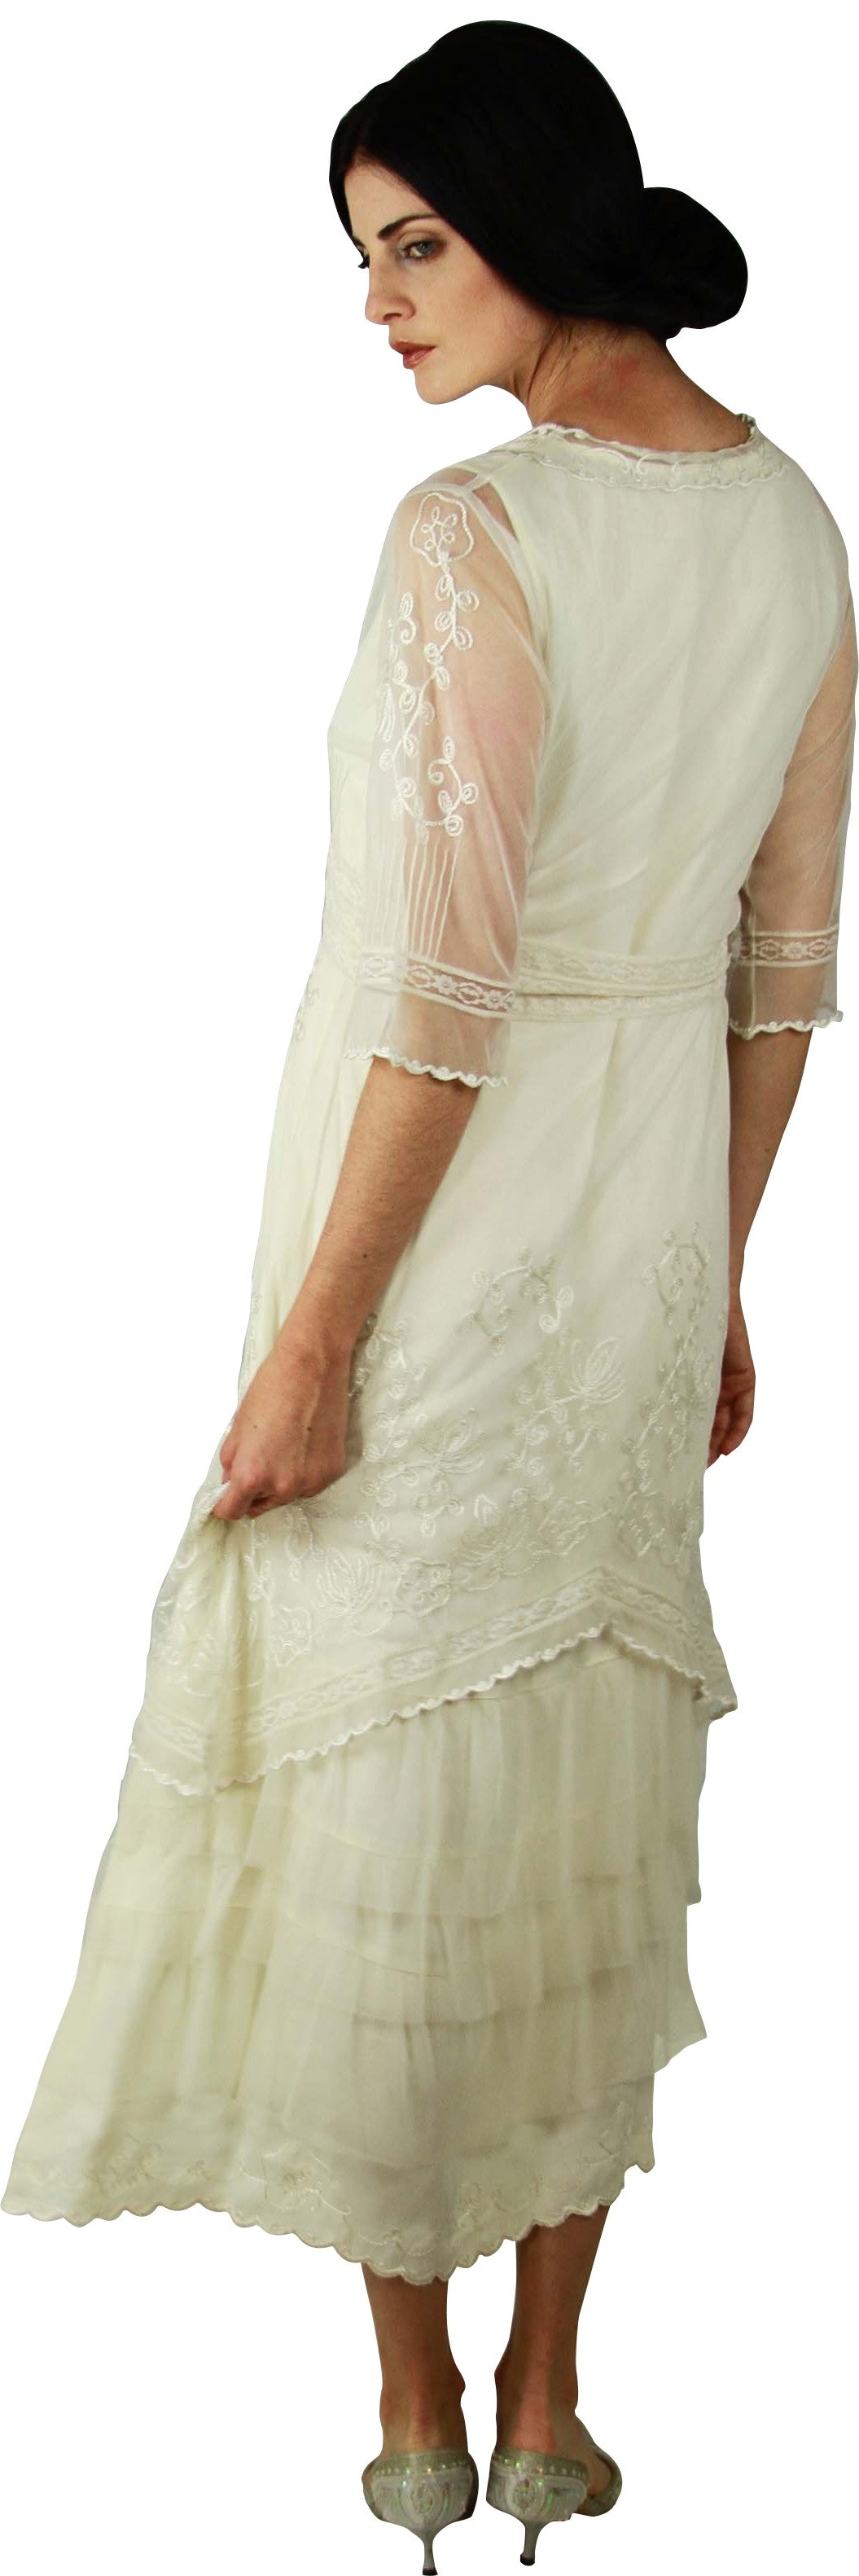 Titanic Tea Party Dress in Ivory by Nataya